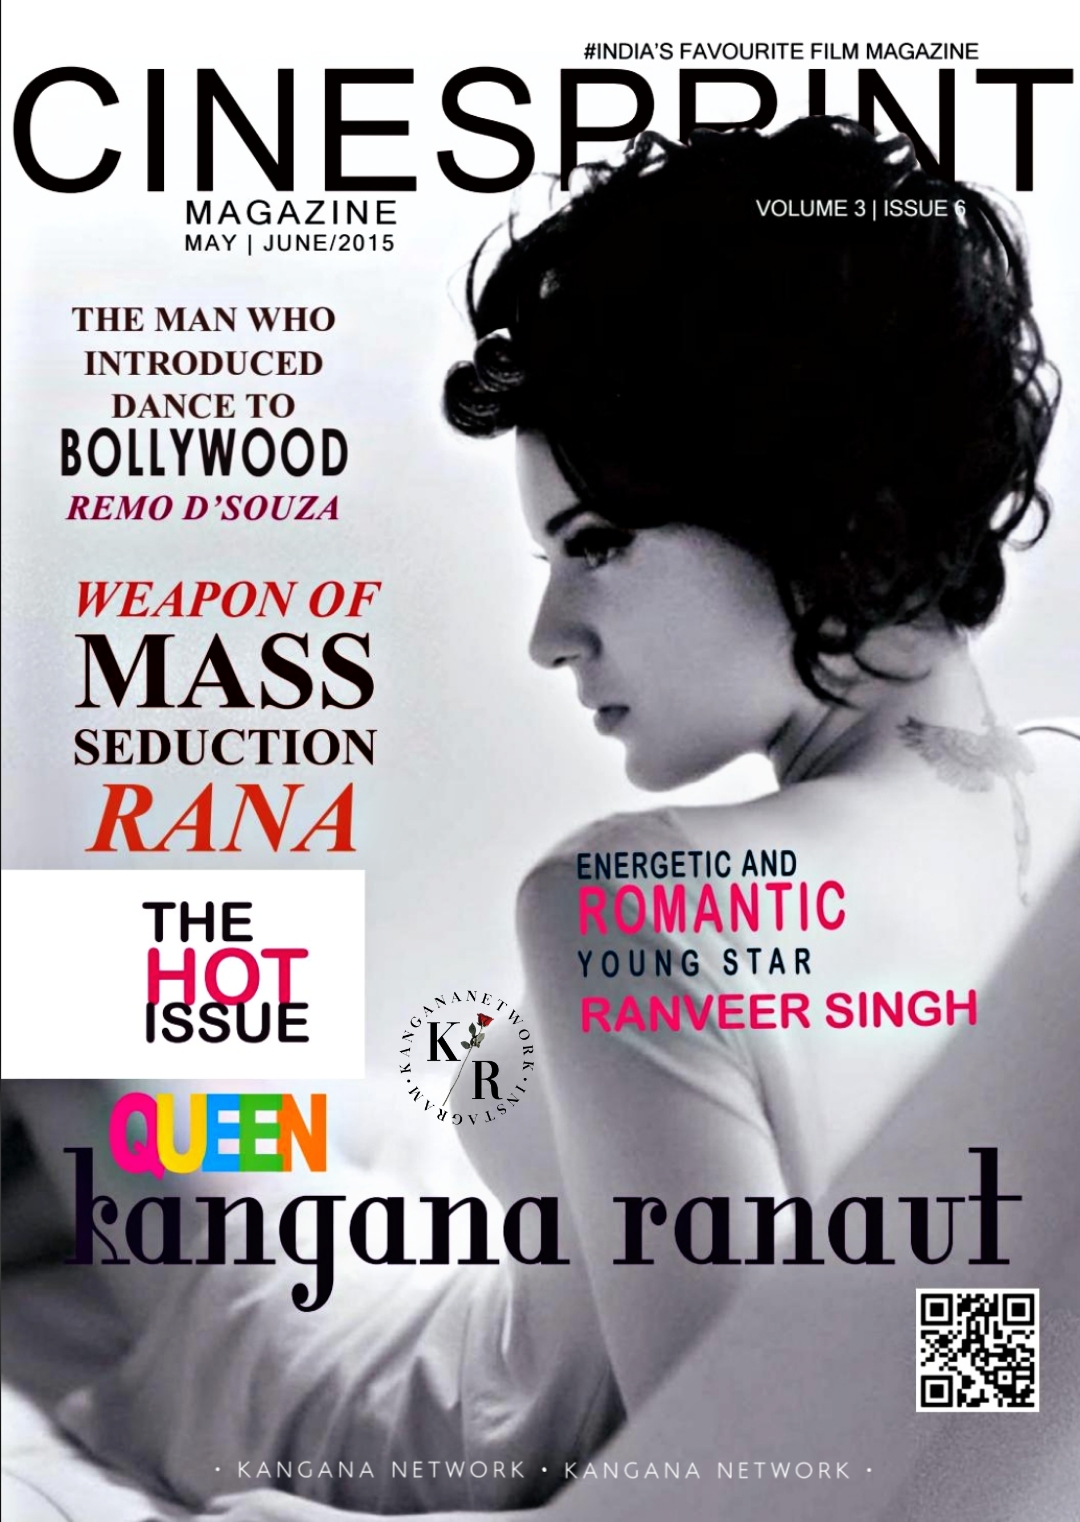 KANGANA RANAUT ON THE COVER OF CINESPRINT